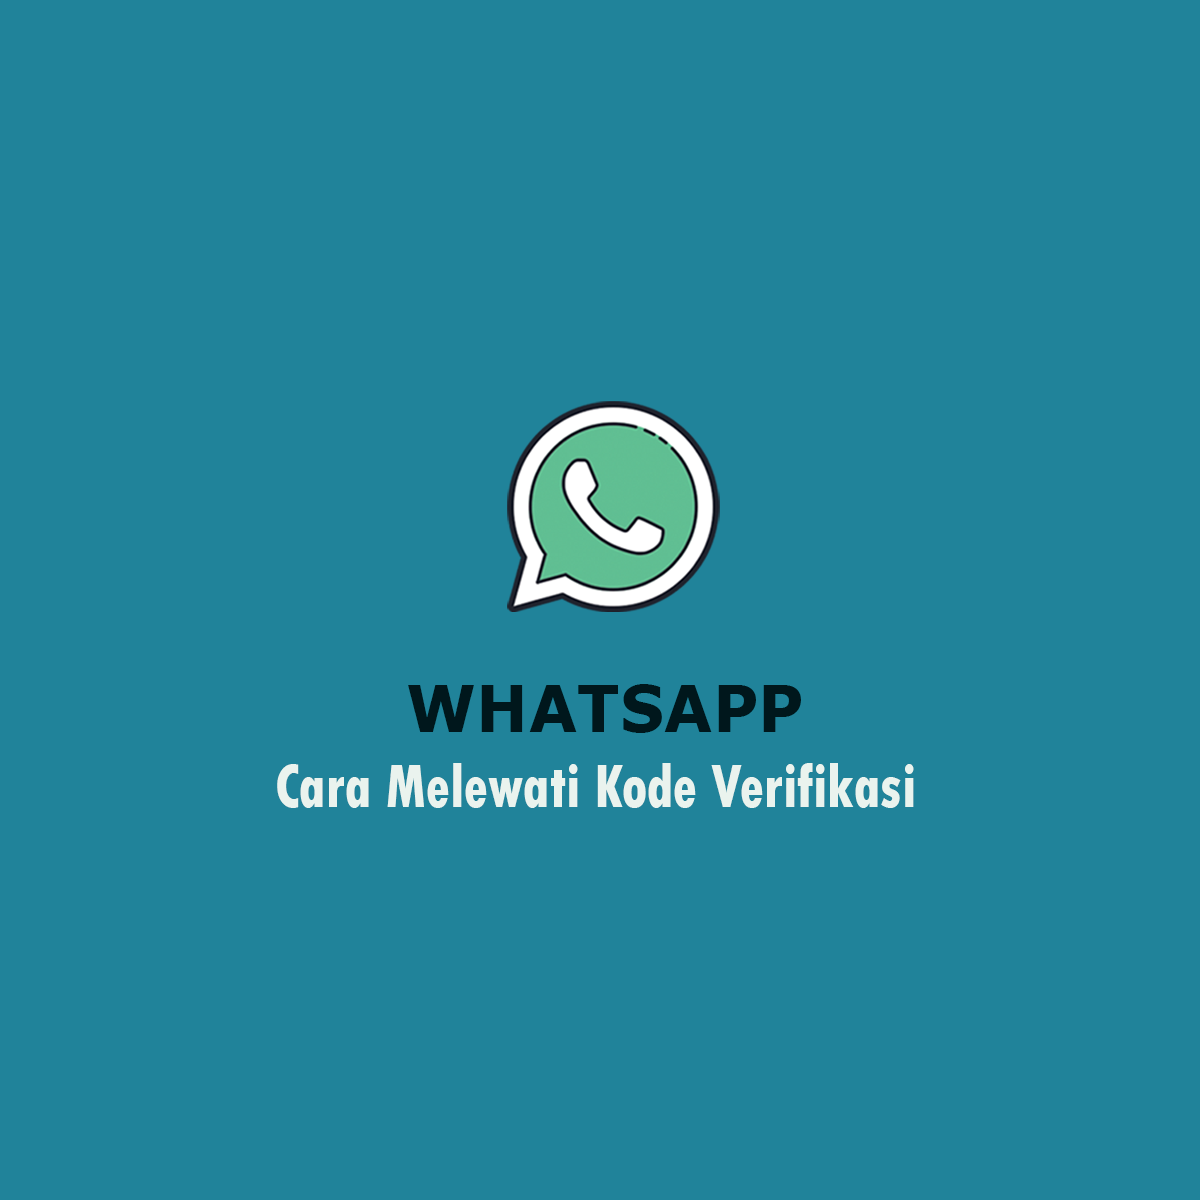 cara melewati kode verifikasi whatsapp